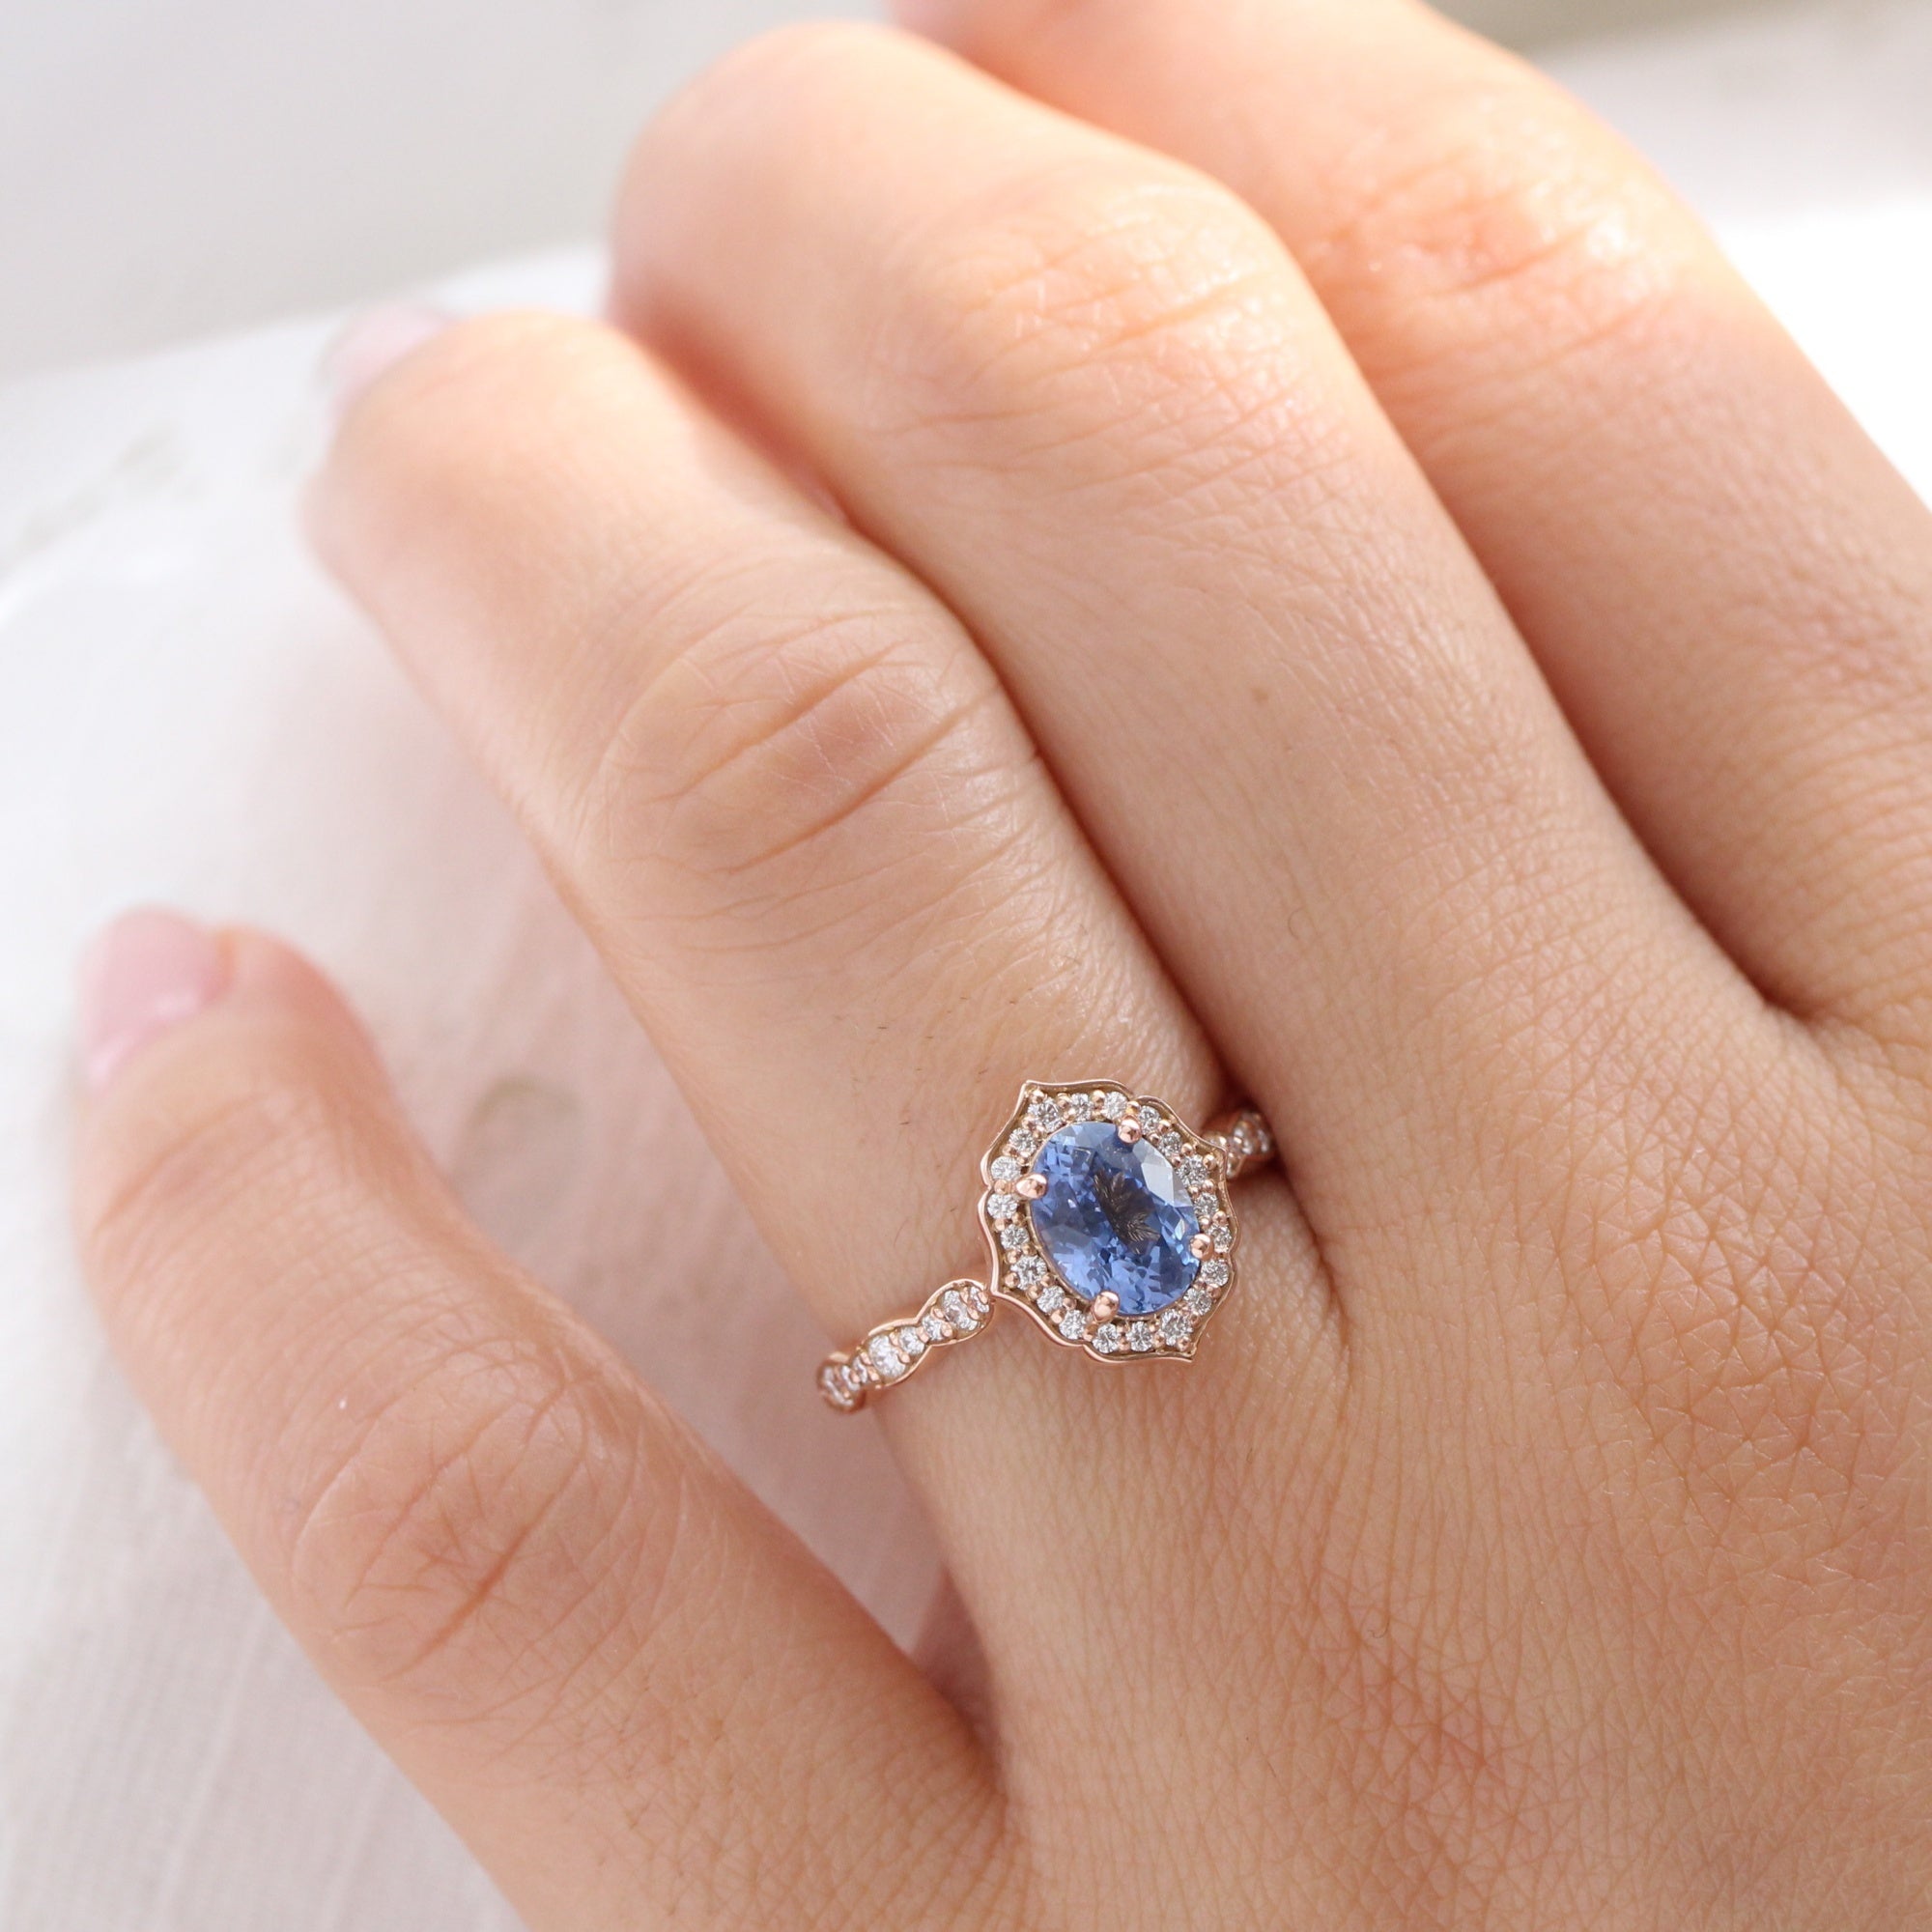 Oval aqua blue sapphire ring rose gold vintage halo diamond ring la more design jewelry